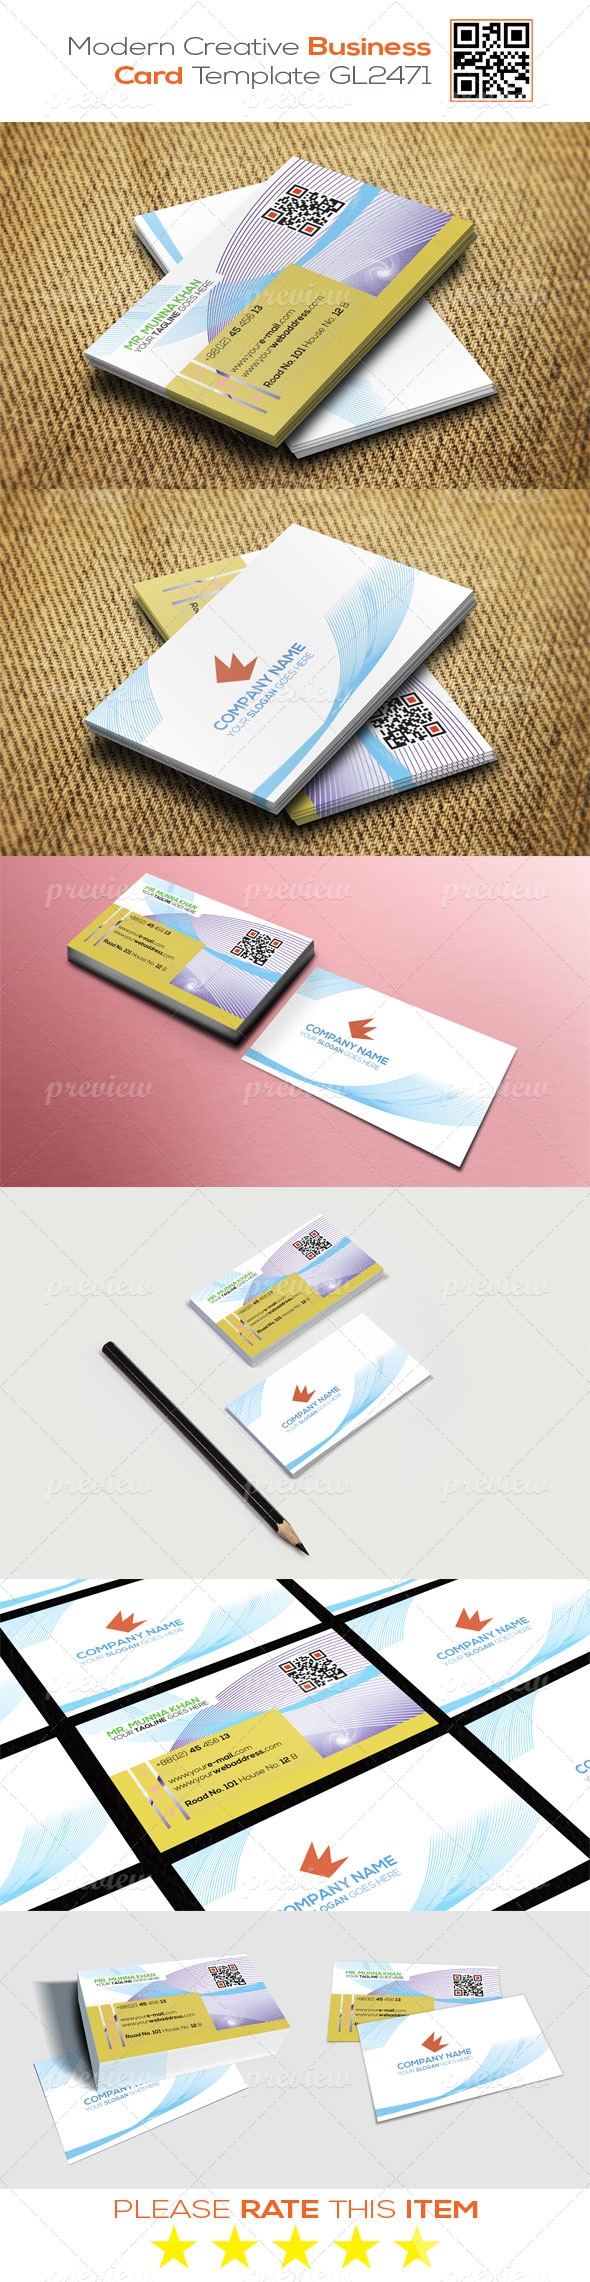 Modern Creative Business Card Template GL2471